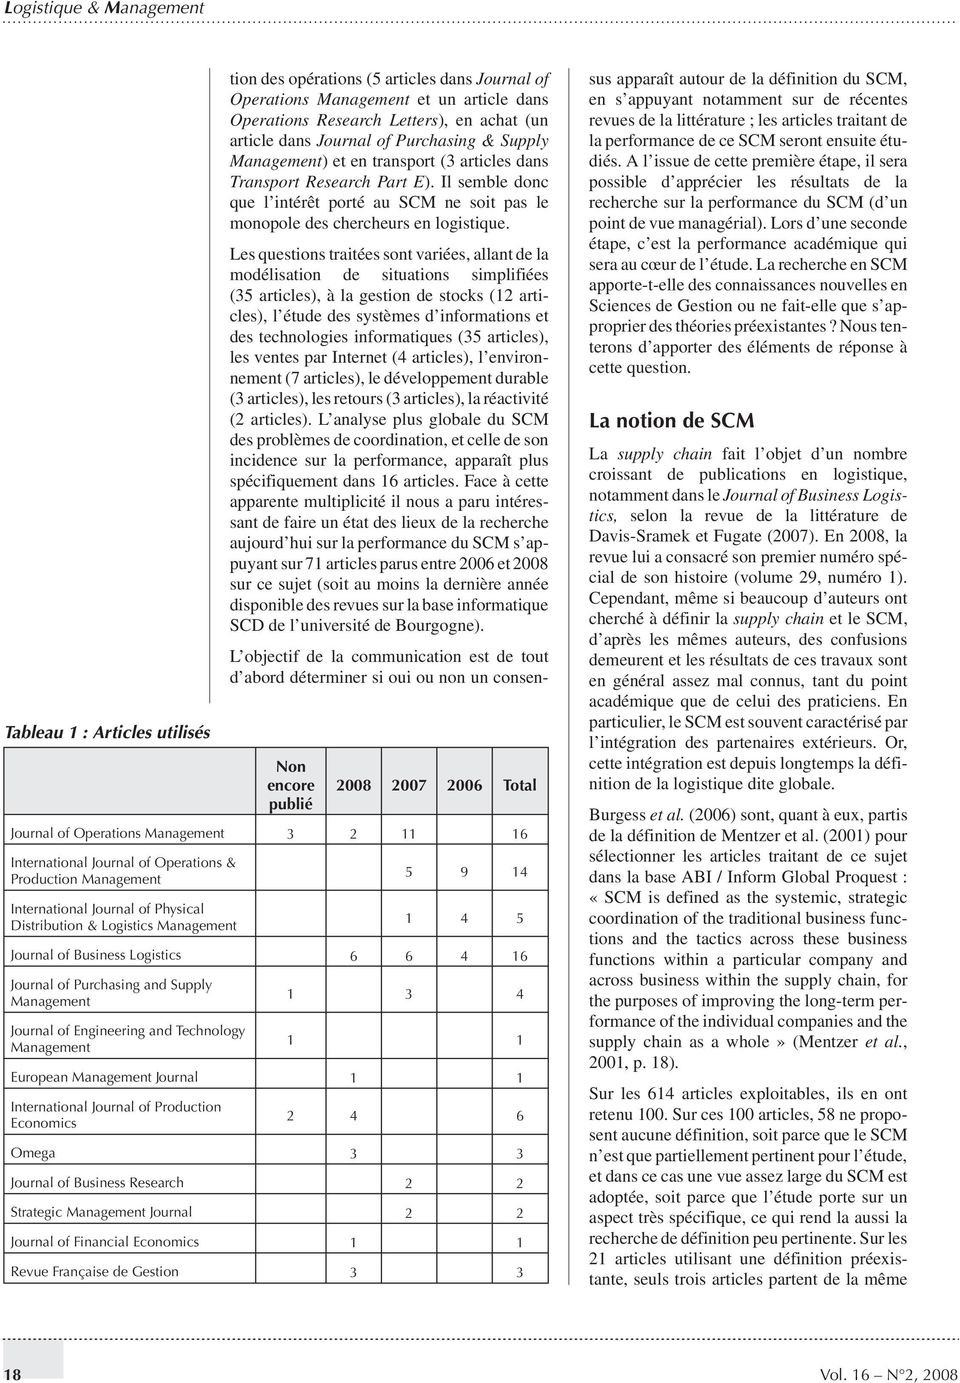 1 1 European Management Journal 1 1 International Journal of Production Economics 2 4 6 Omega 3 3 Journal of Business Research 2 2 Strategic Management Journal 2 2 Journal of Financial Economics 1 1